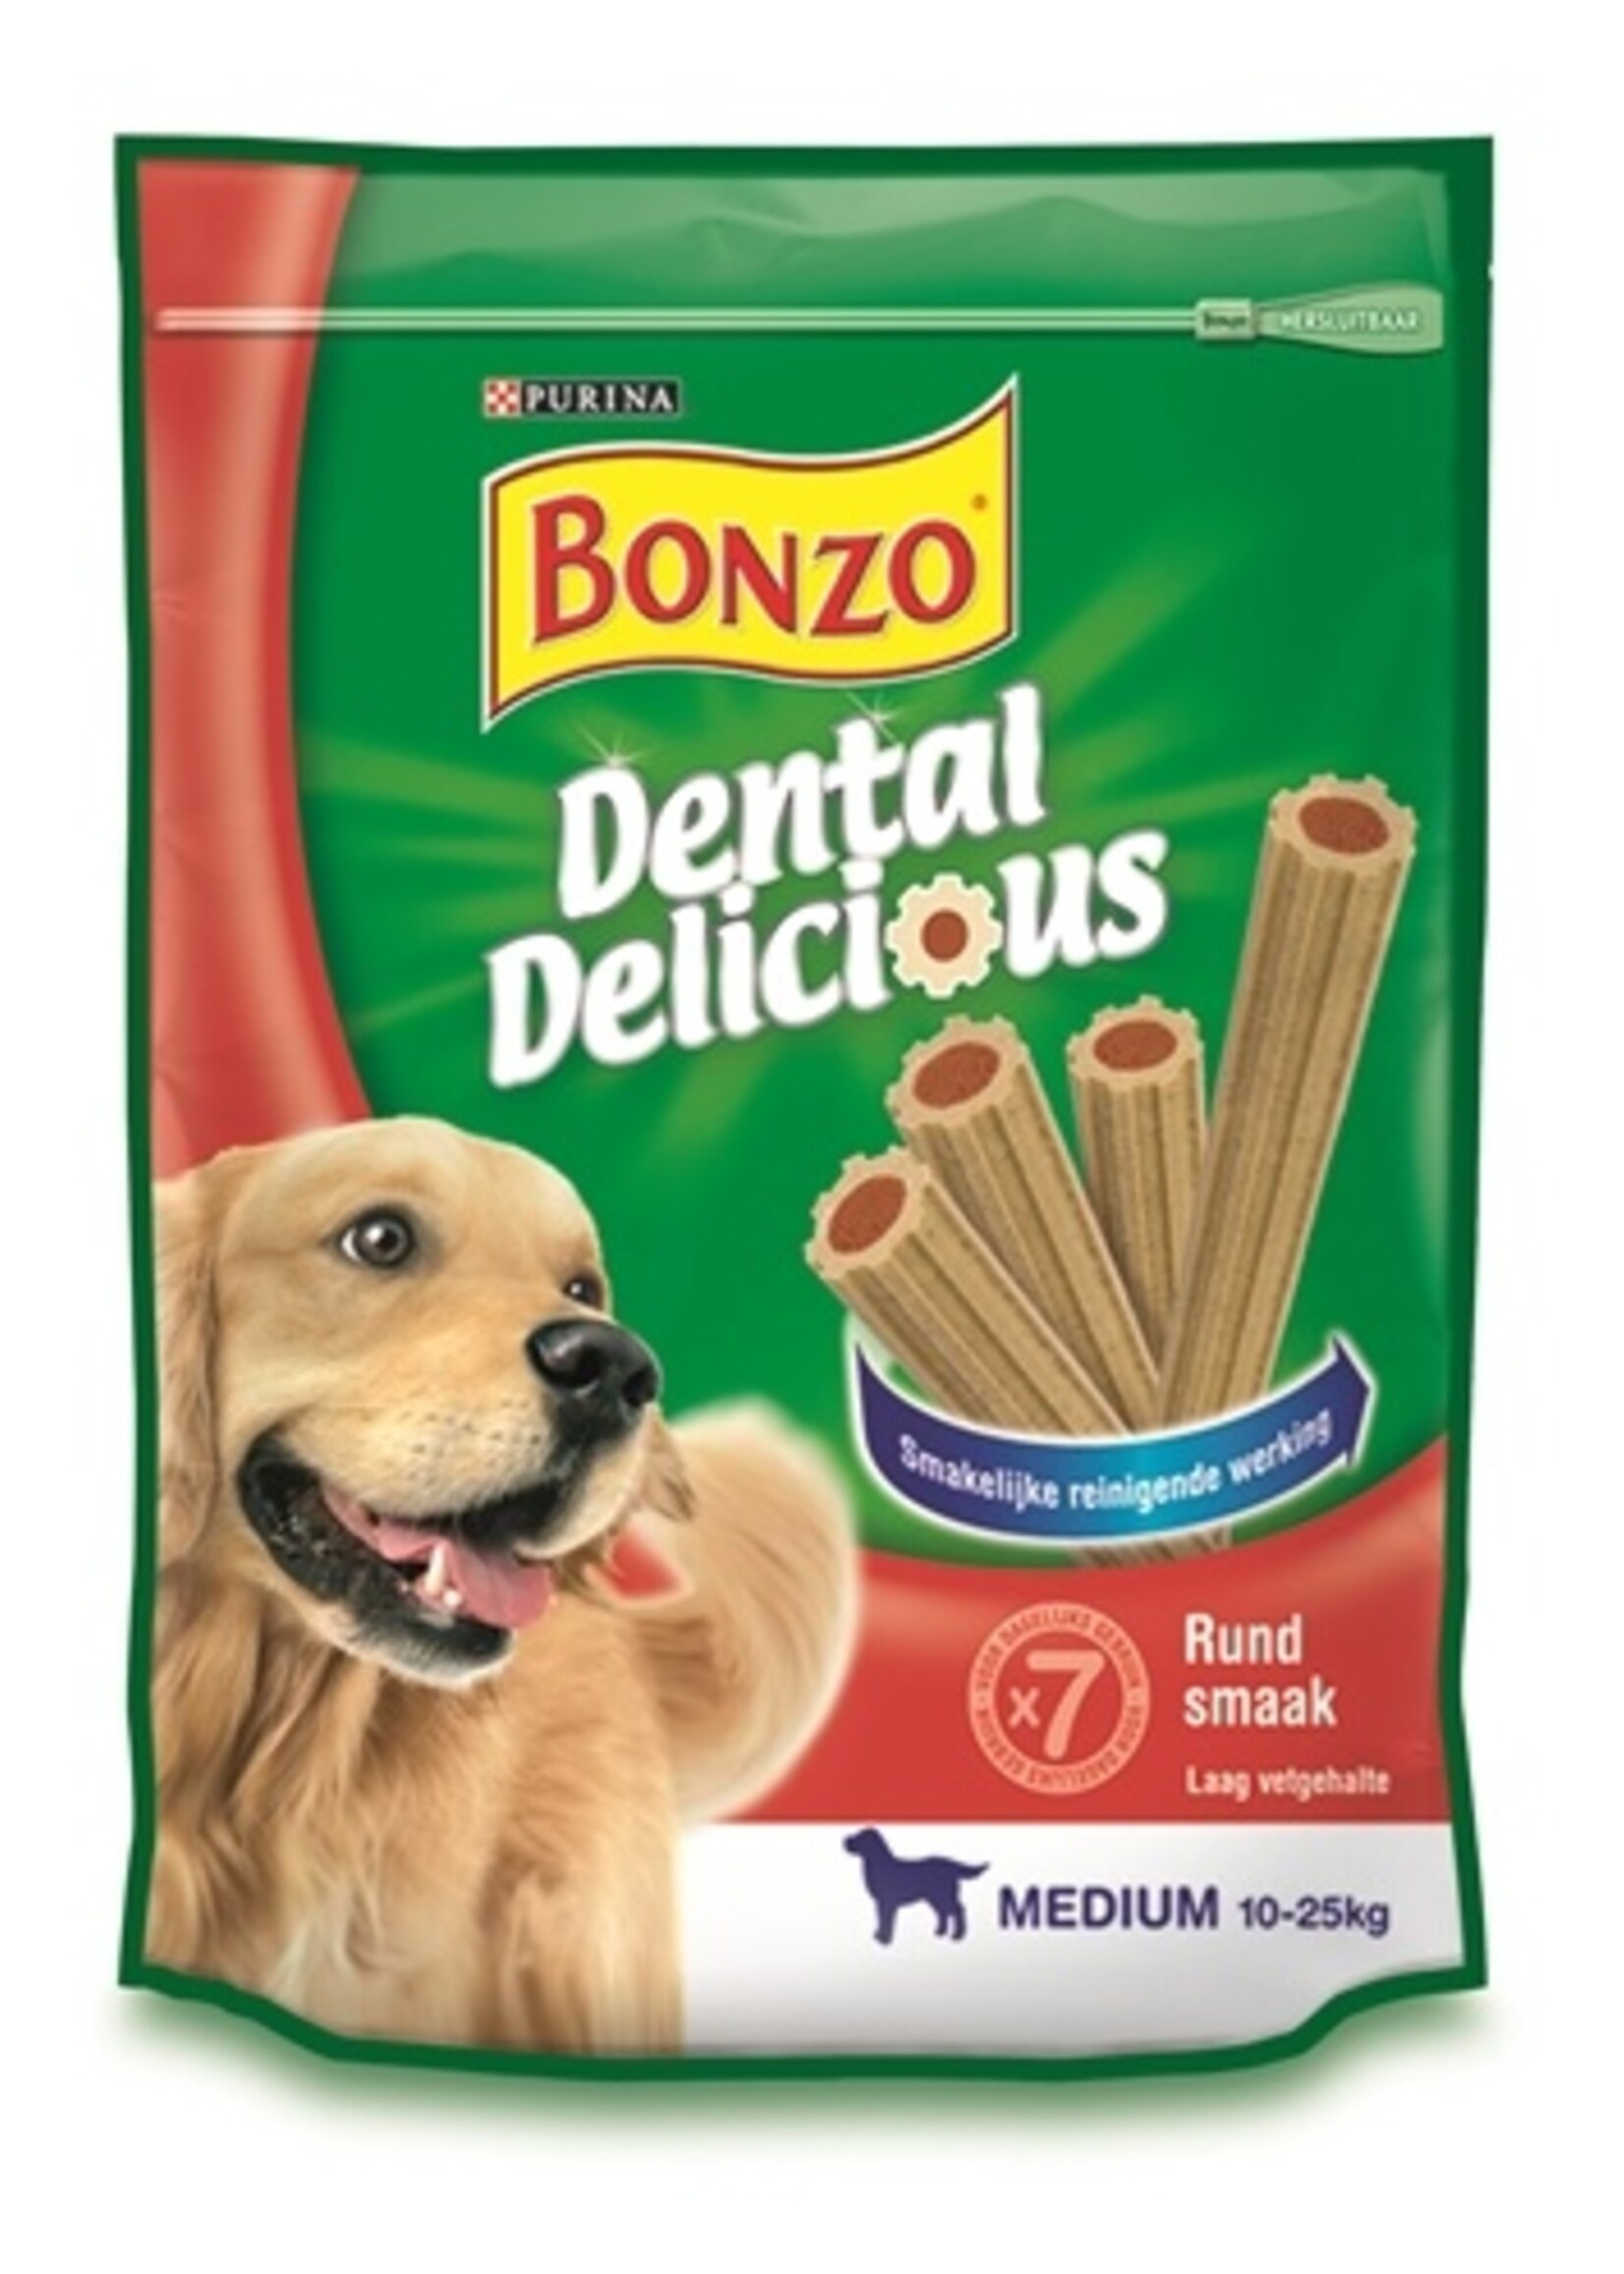 Bonzo Bonzo dental delicious rund smaak